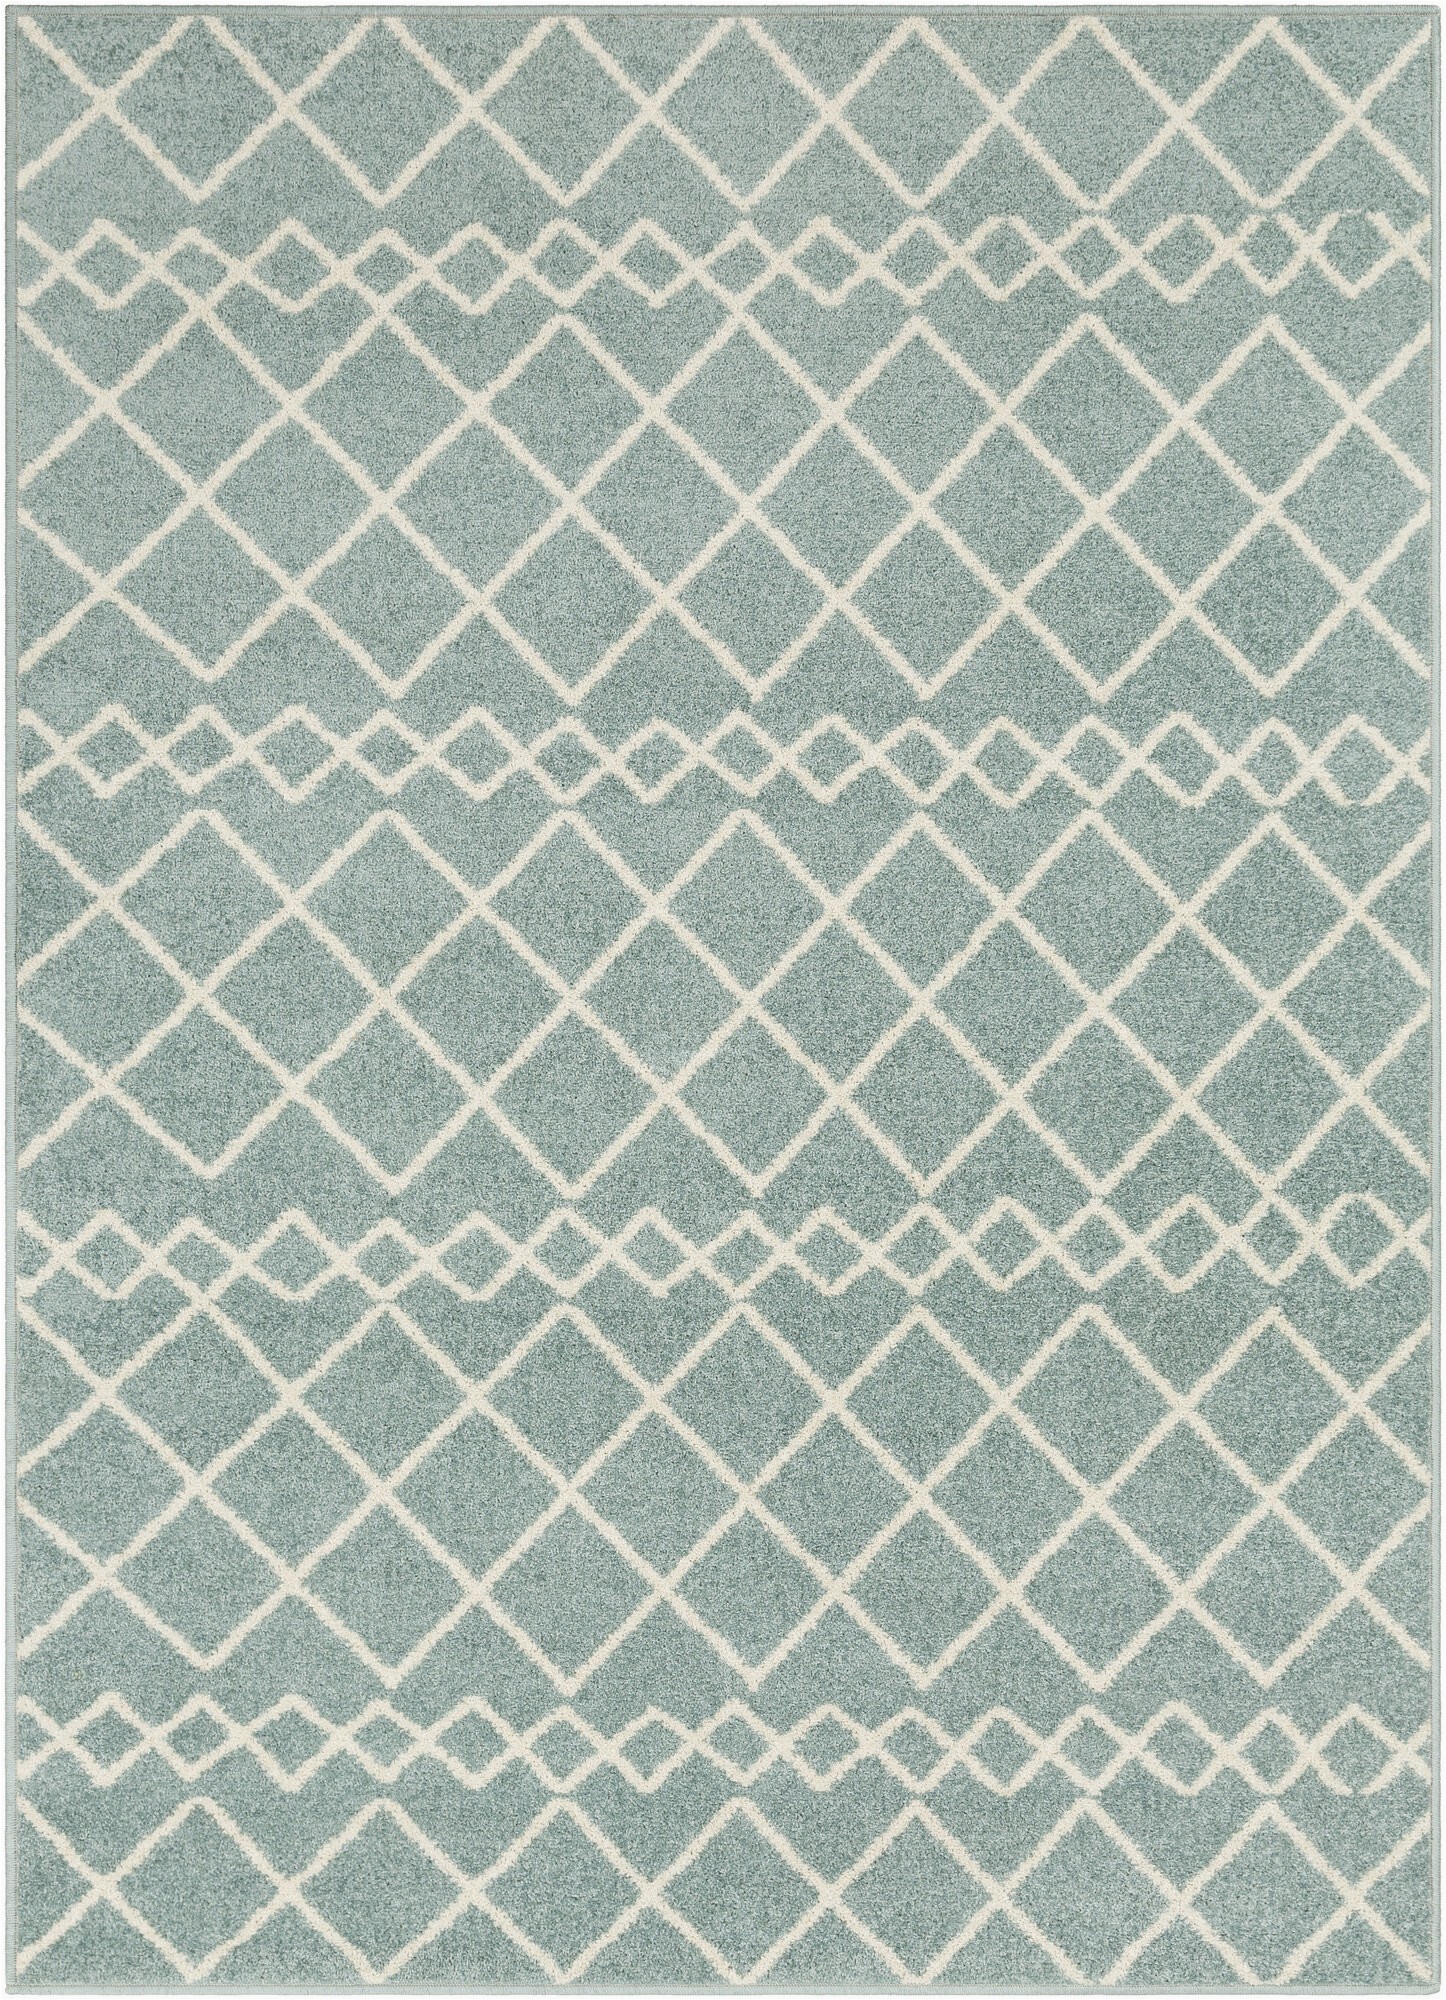 laylah geometric aquawhite area rug